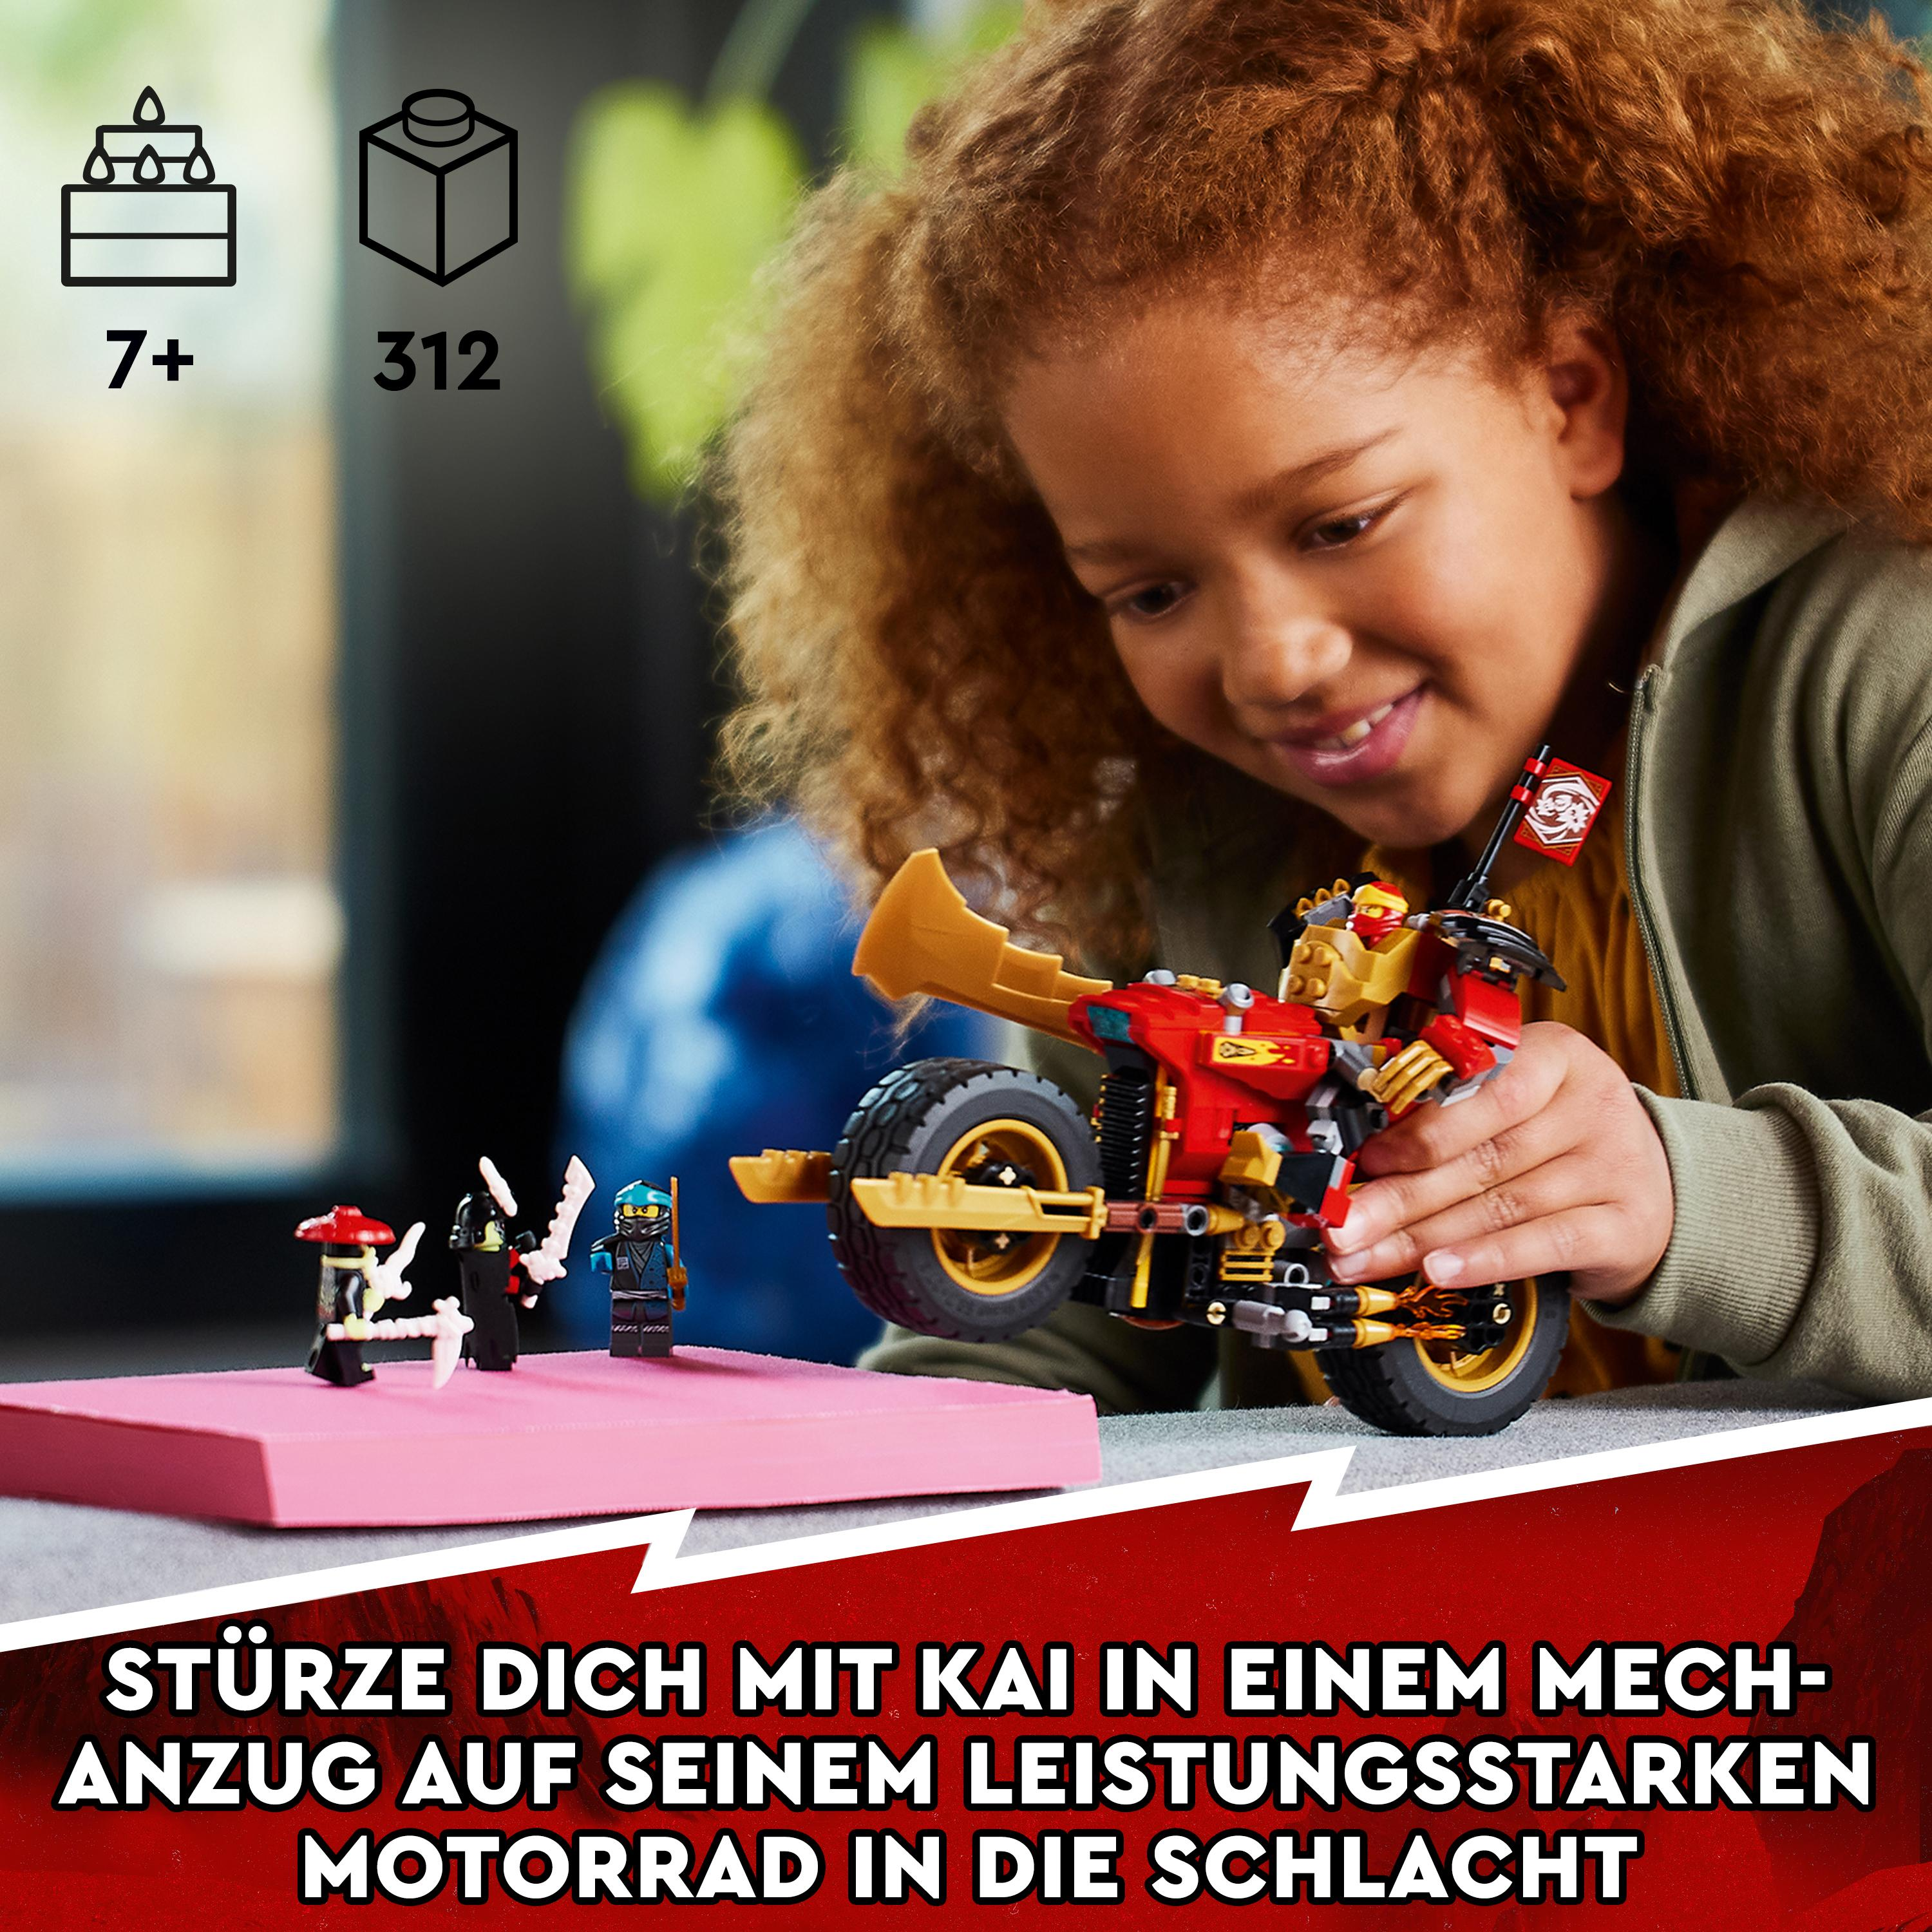 LEGO NINJAGO 71783 Kais Bausatz, EVO Mech-Bike Mehrfarbig